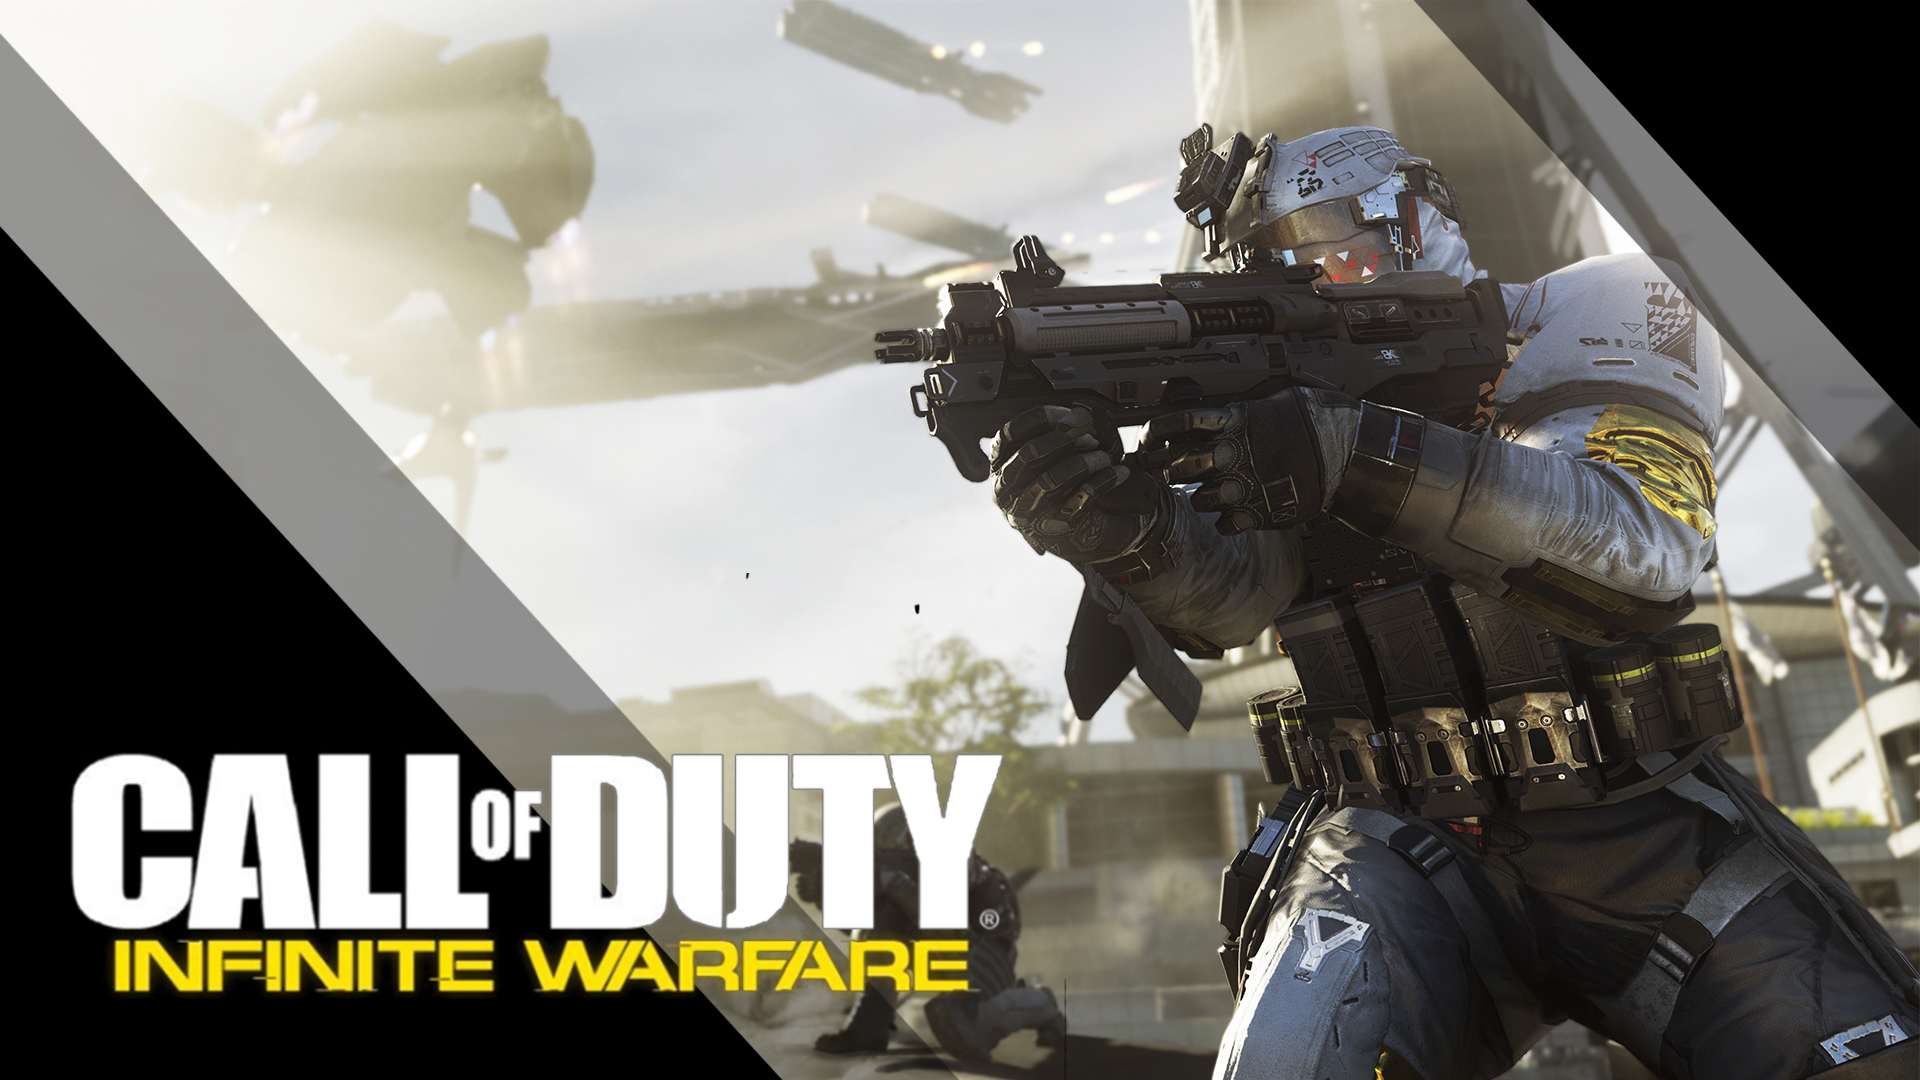 Free download Call Of Duty Call Of Duty Infinite Warfare Wallpaper 4k [1920x1080] for your Desktop, Mobile & Tablet. Explore Call Of Duty Infinite Warfare Logo Wallpaper